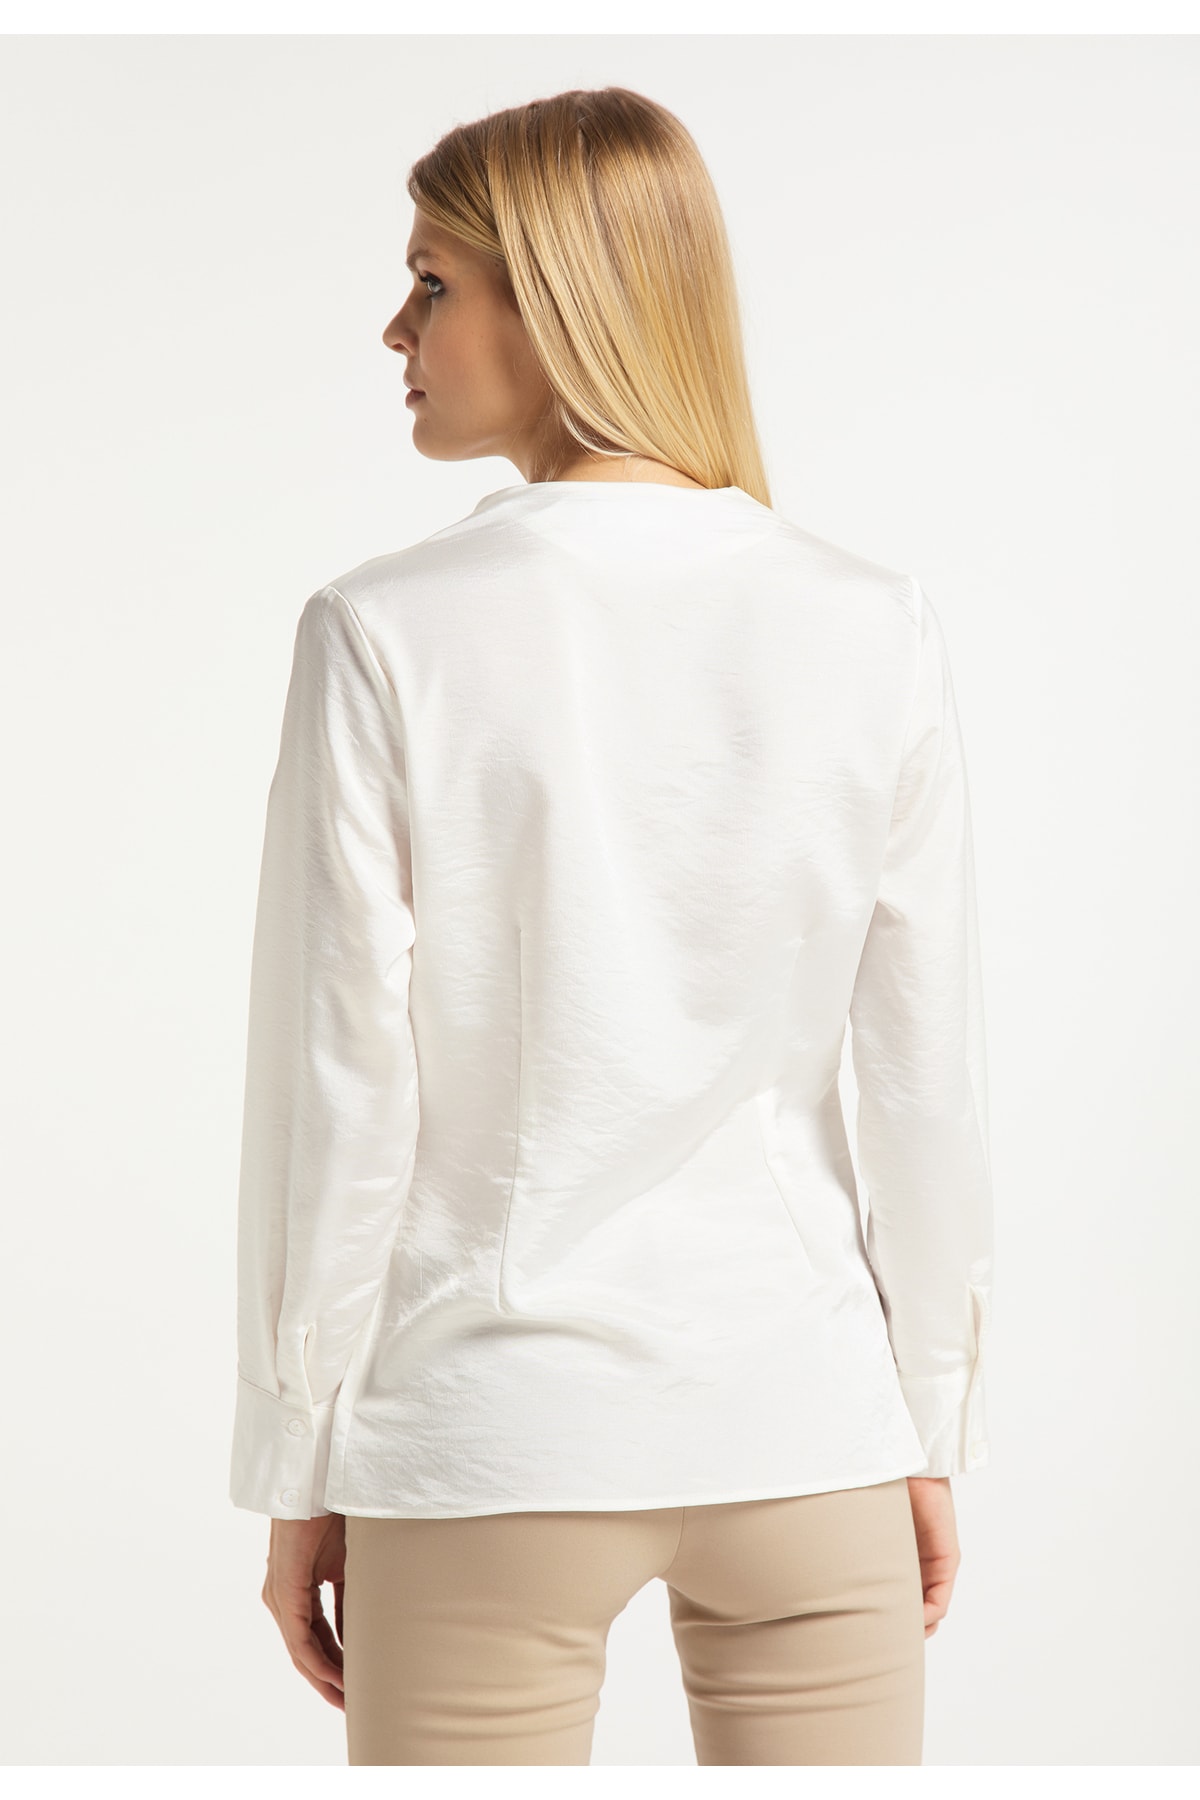 RISA Bluse Weiß Regular Fit Fast ausverkauft